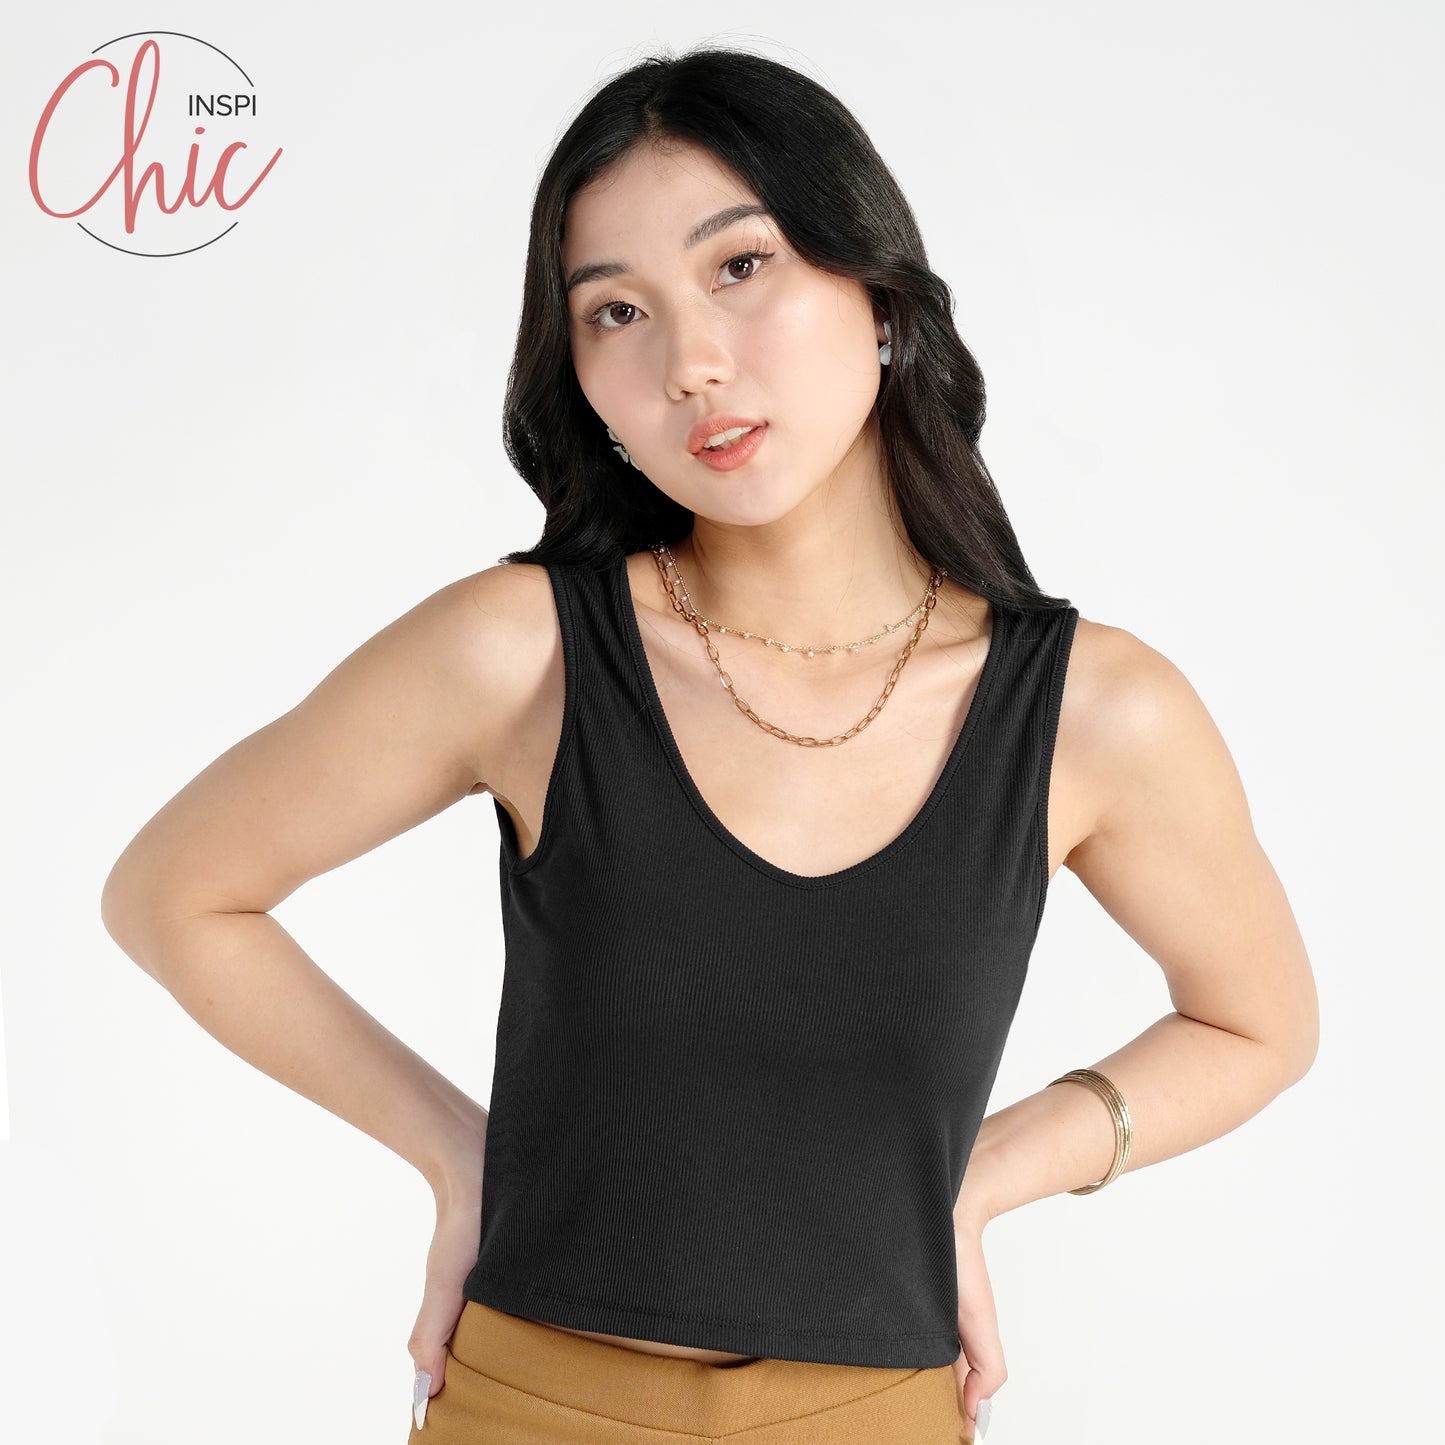 INSPI Chic Trendy Curve Ribbed Deep V-Neck Trendy Top Shirt Sleeveless Top Long Sleeve for Women